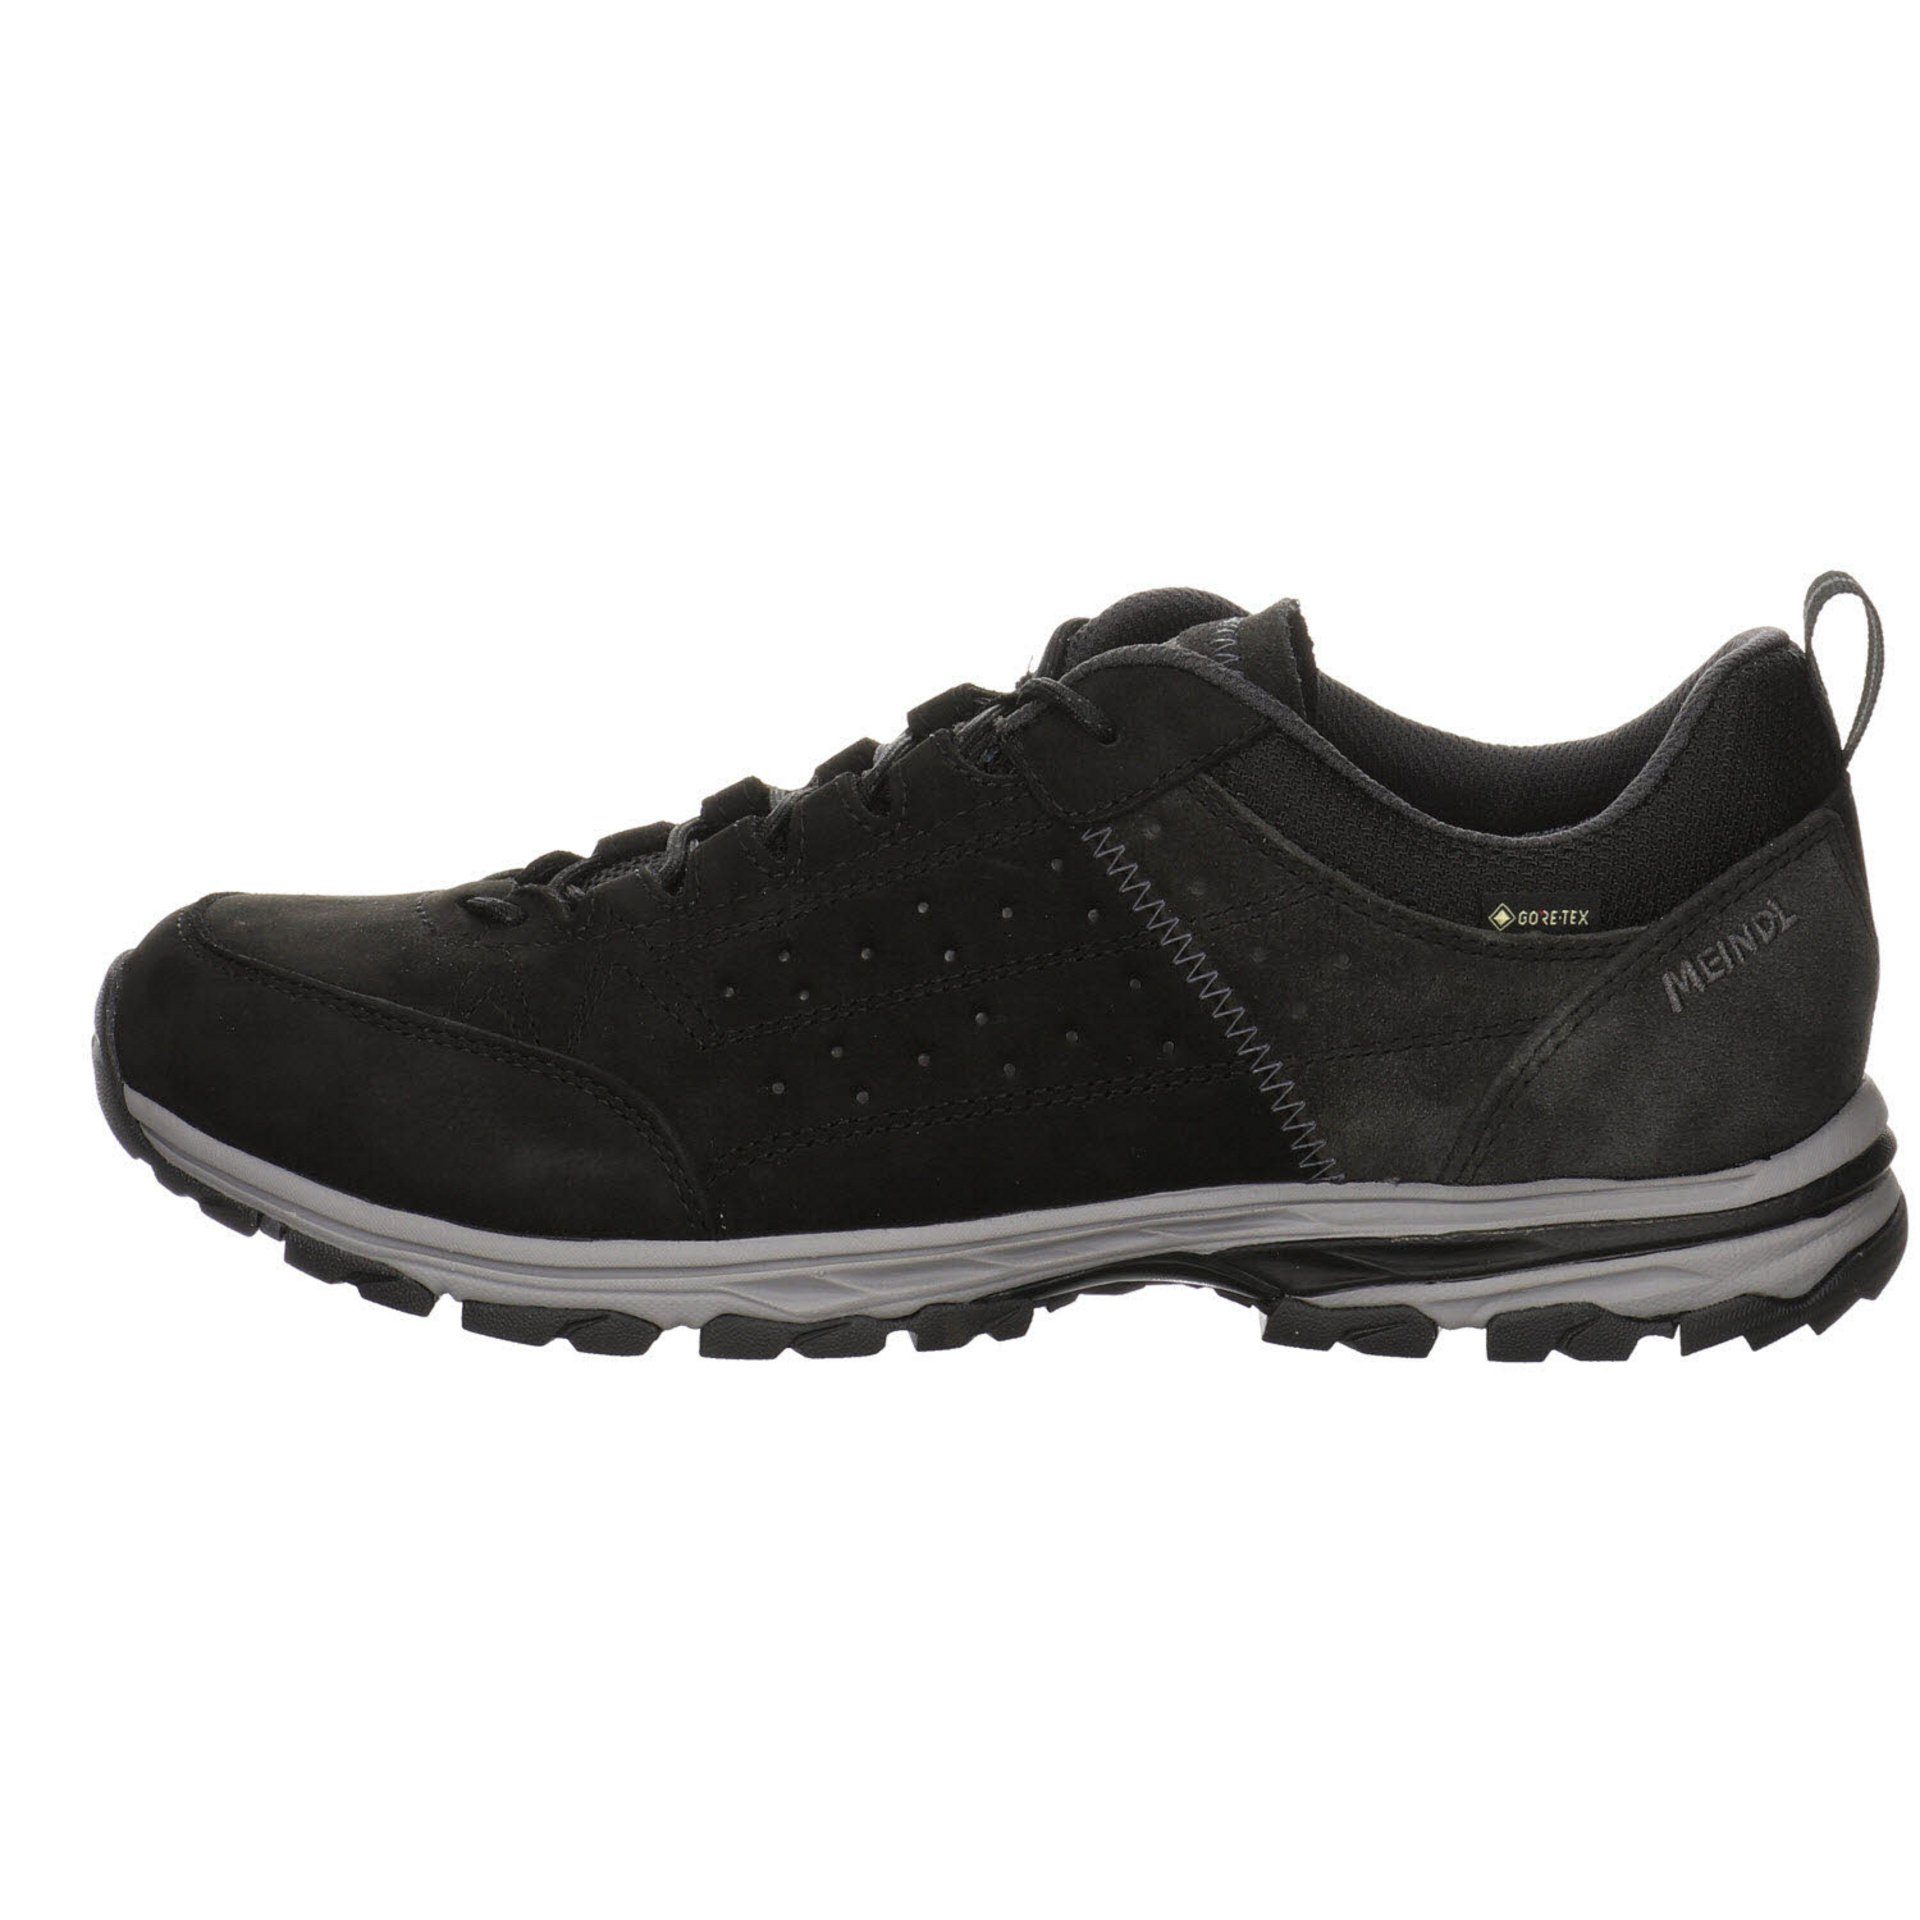 Meindl Herren GTX Outdoor Outdoorschuh Outdoorschuh dunkel Durban schwarz Leder-/Textilkombination Schuhe